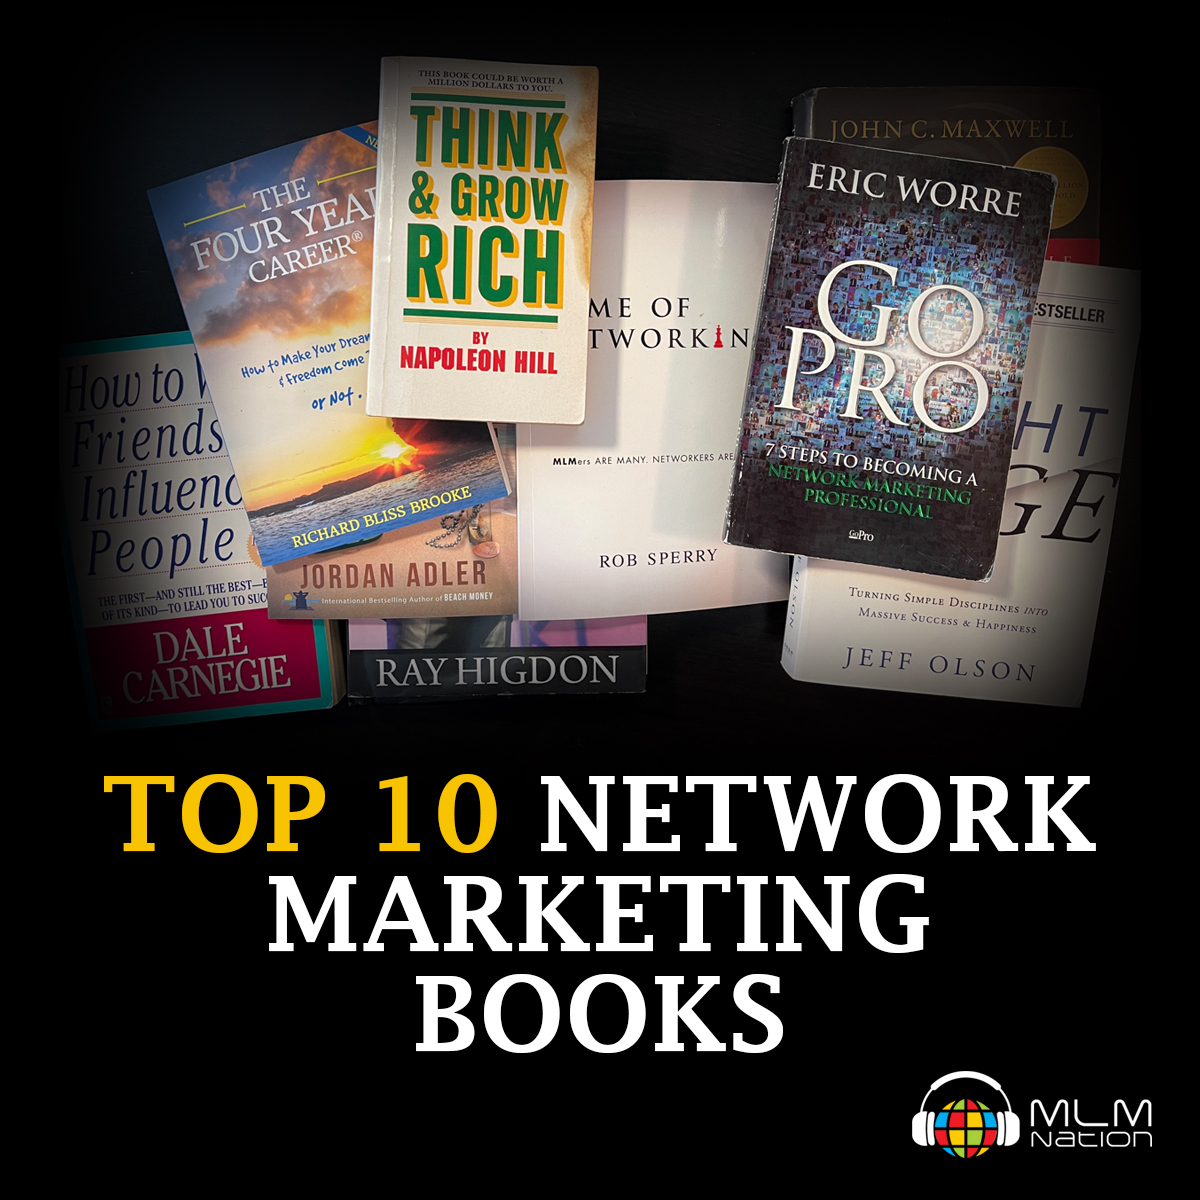 Top 10 Network Marketing Books